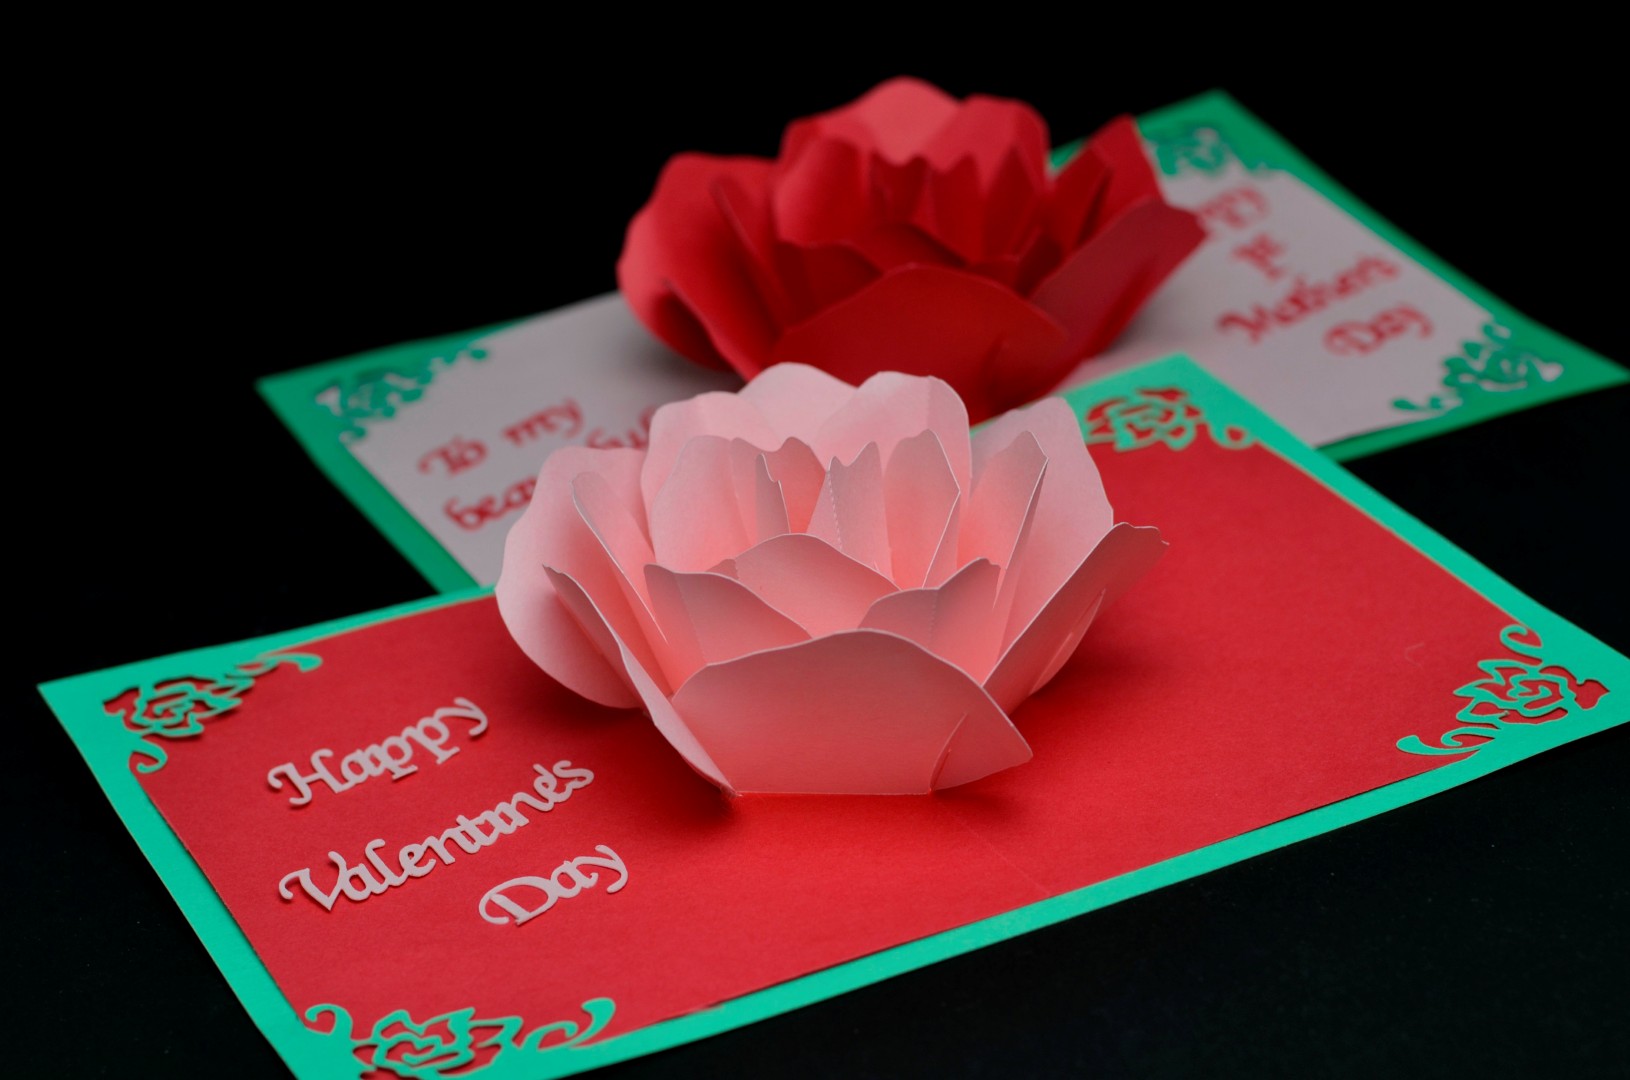 Floral Heart Valentines Card Floral Anniversary Card Love Heart Cards Heart  Valentines Day Cards Floral Cards Cards for Her 